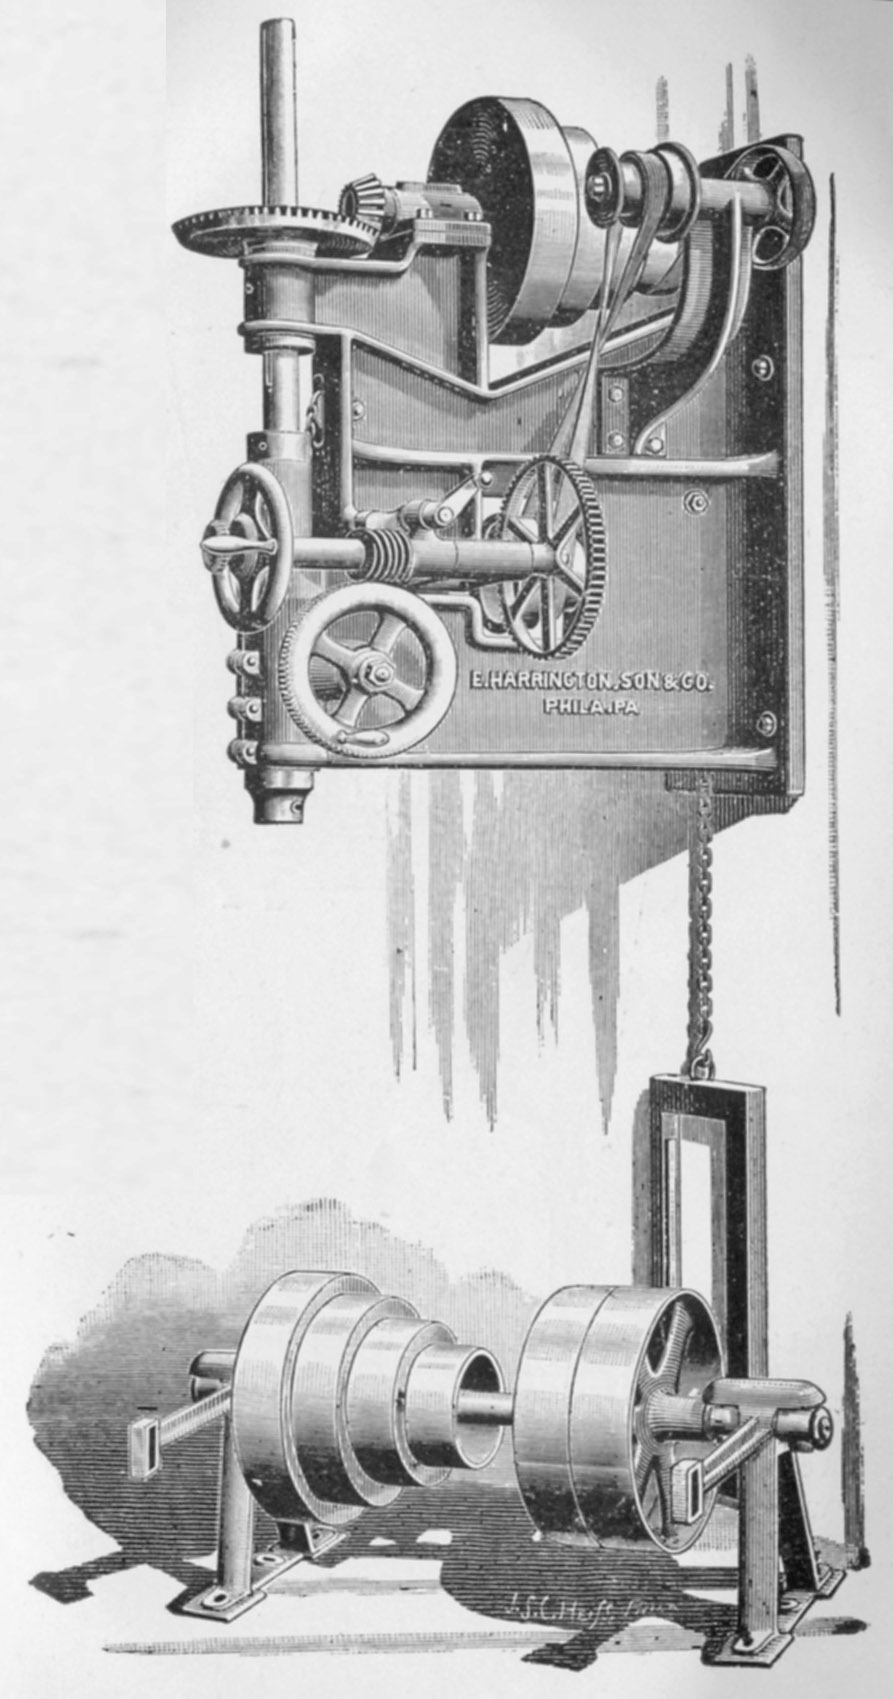 Edwin Harrington Wall or Post Drill, page 65